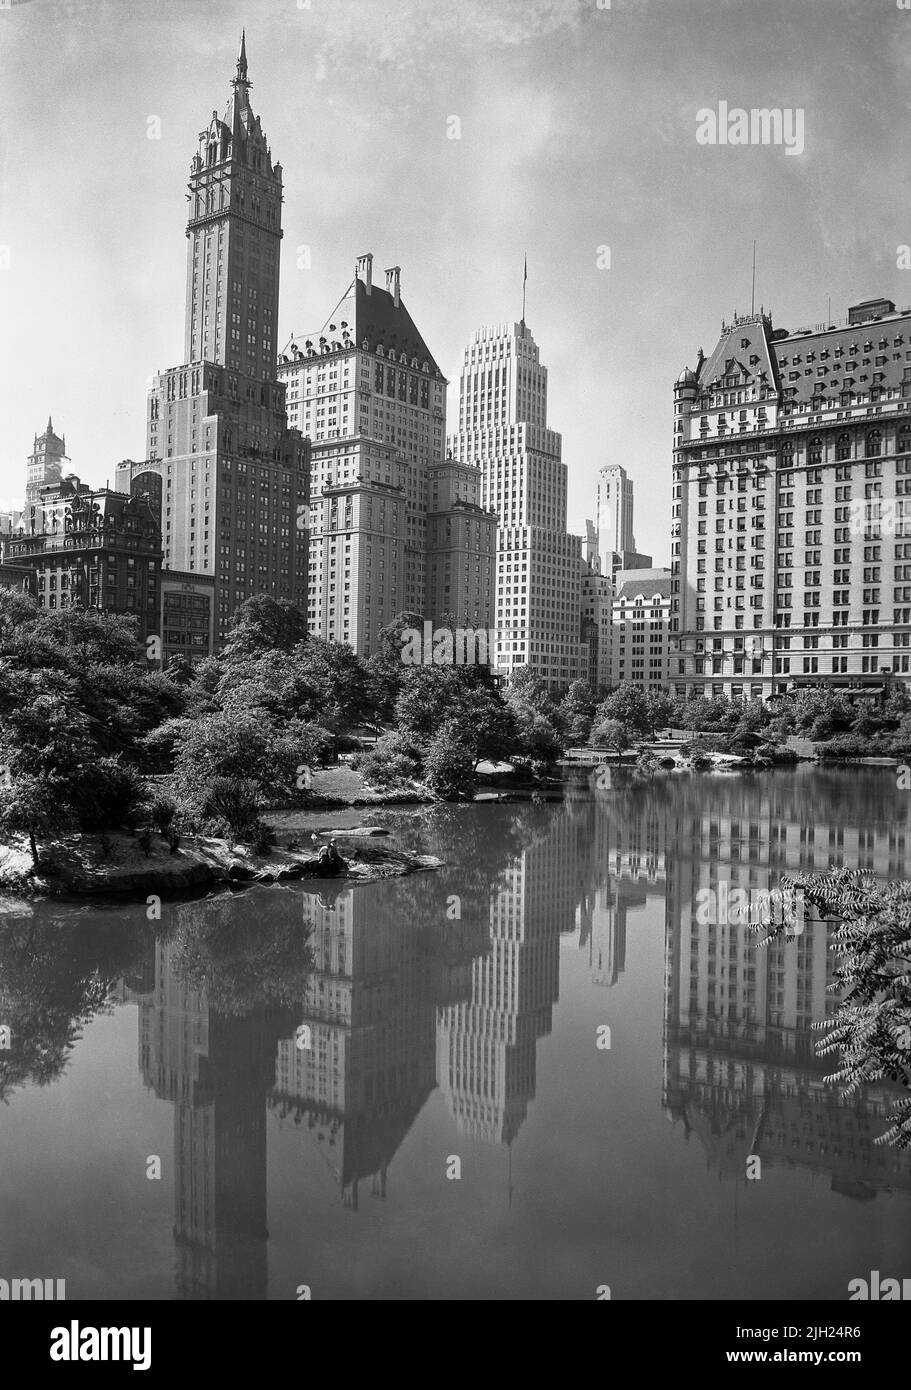 Blick vom Central Park, Sherry-Netherland Hotel (links), Plaza Hotel (rechts) mit Reflektionen in Lake, New York City, New York, USA, Gottscho-Schleisner Collection, 1933 Stockfoto